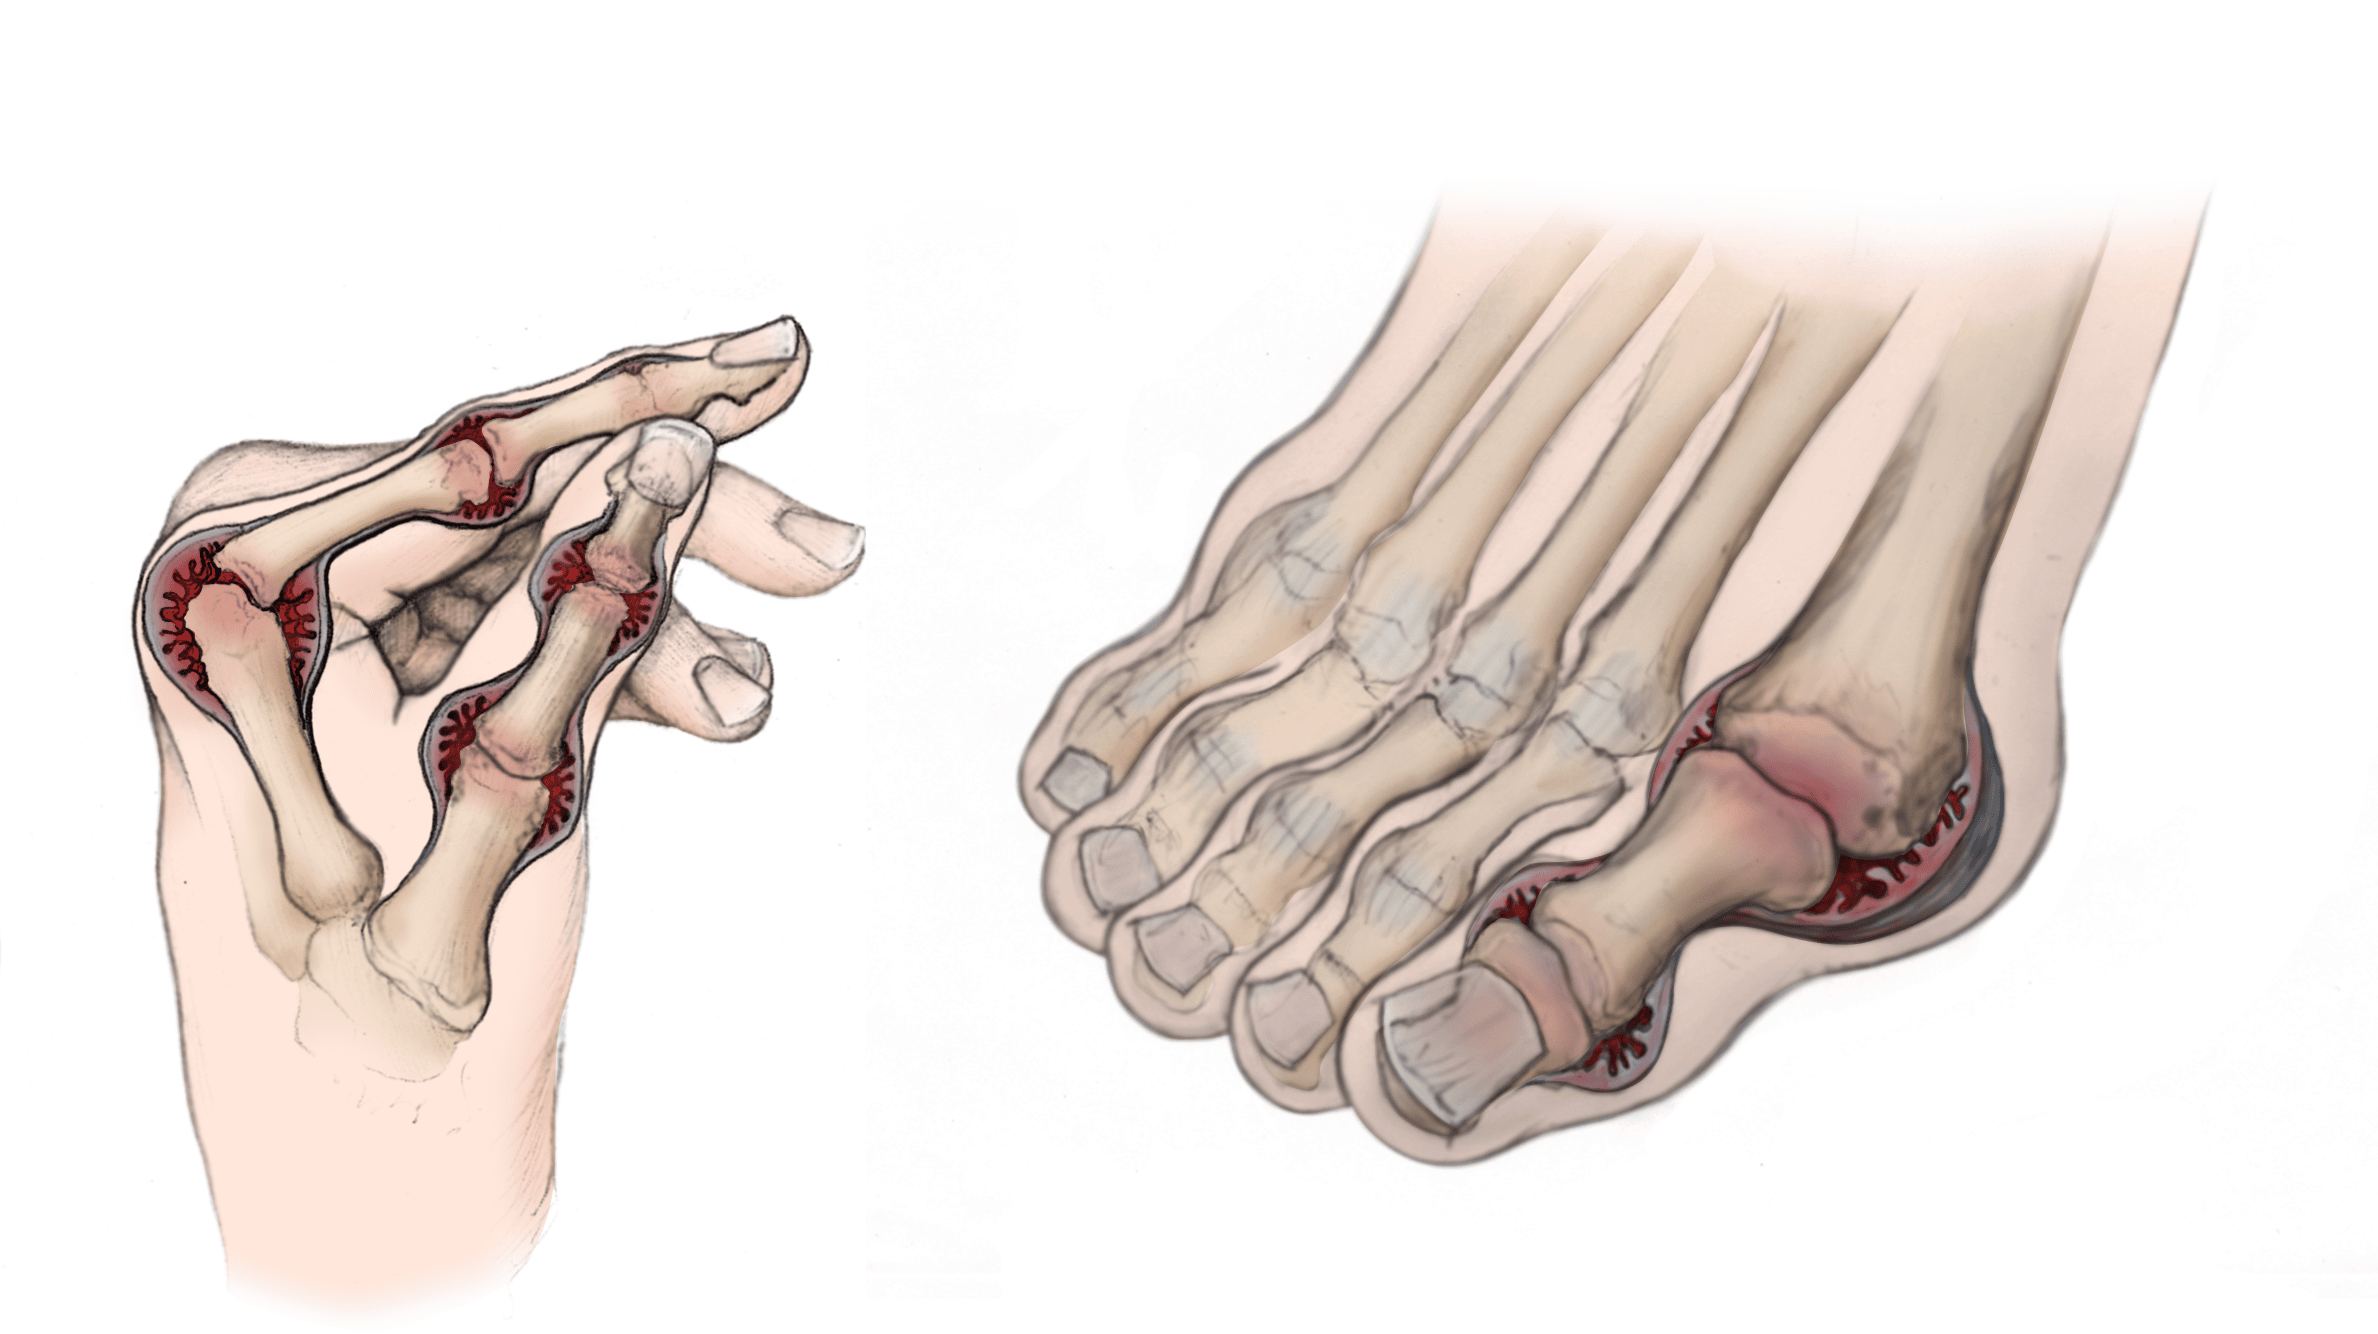 Rheumatoid Arthritis in the Hand and Foot